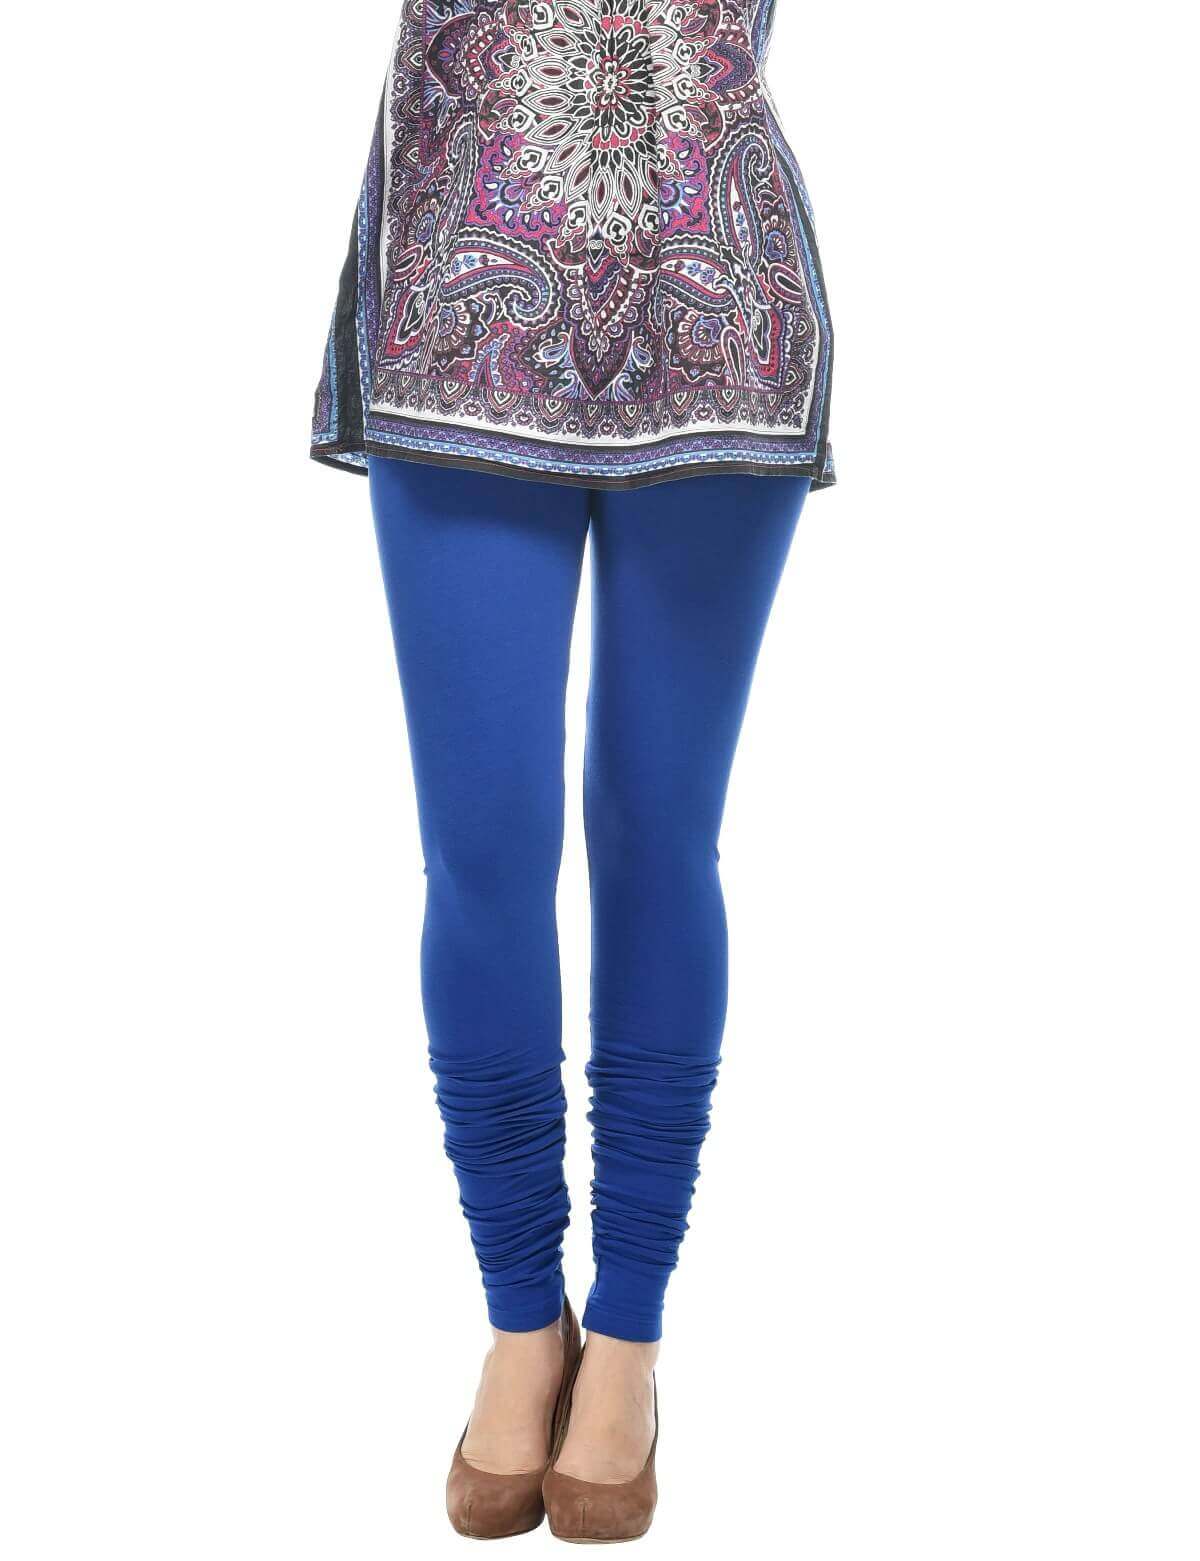 Yuna Fashion - Womens XL Leggings Blue Yoga Stretch Textured | eBay-vinhomehanoi.com.vn